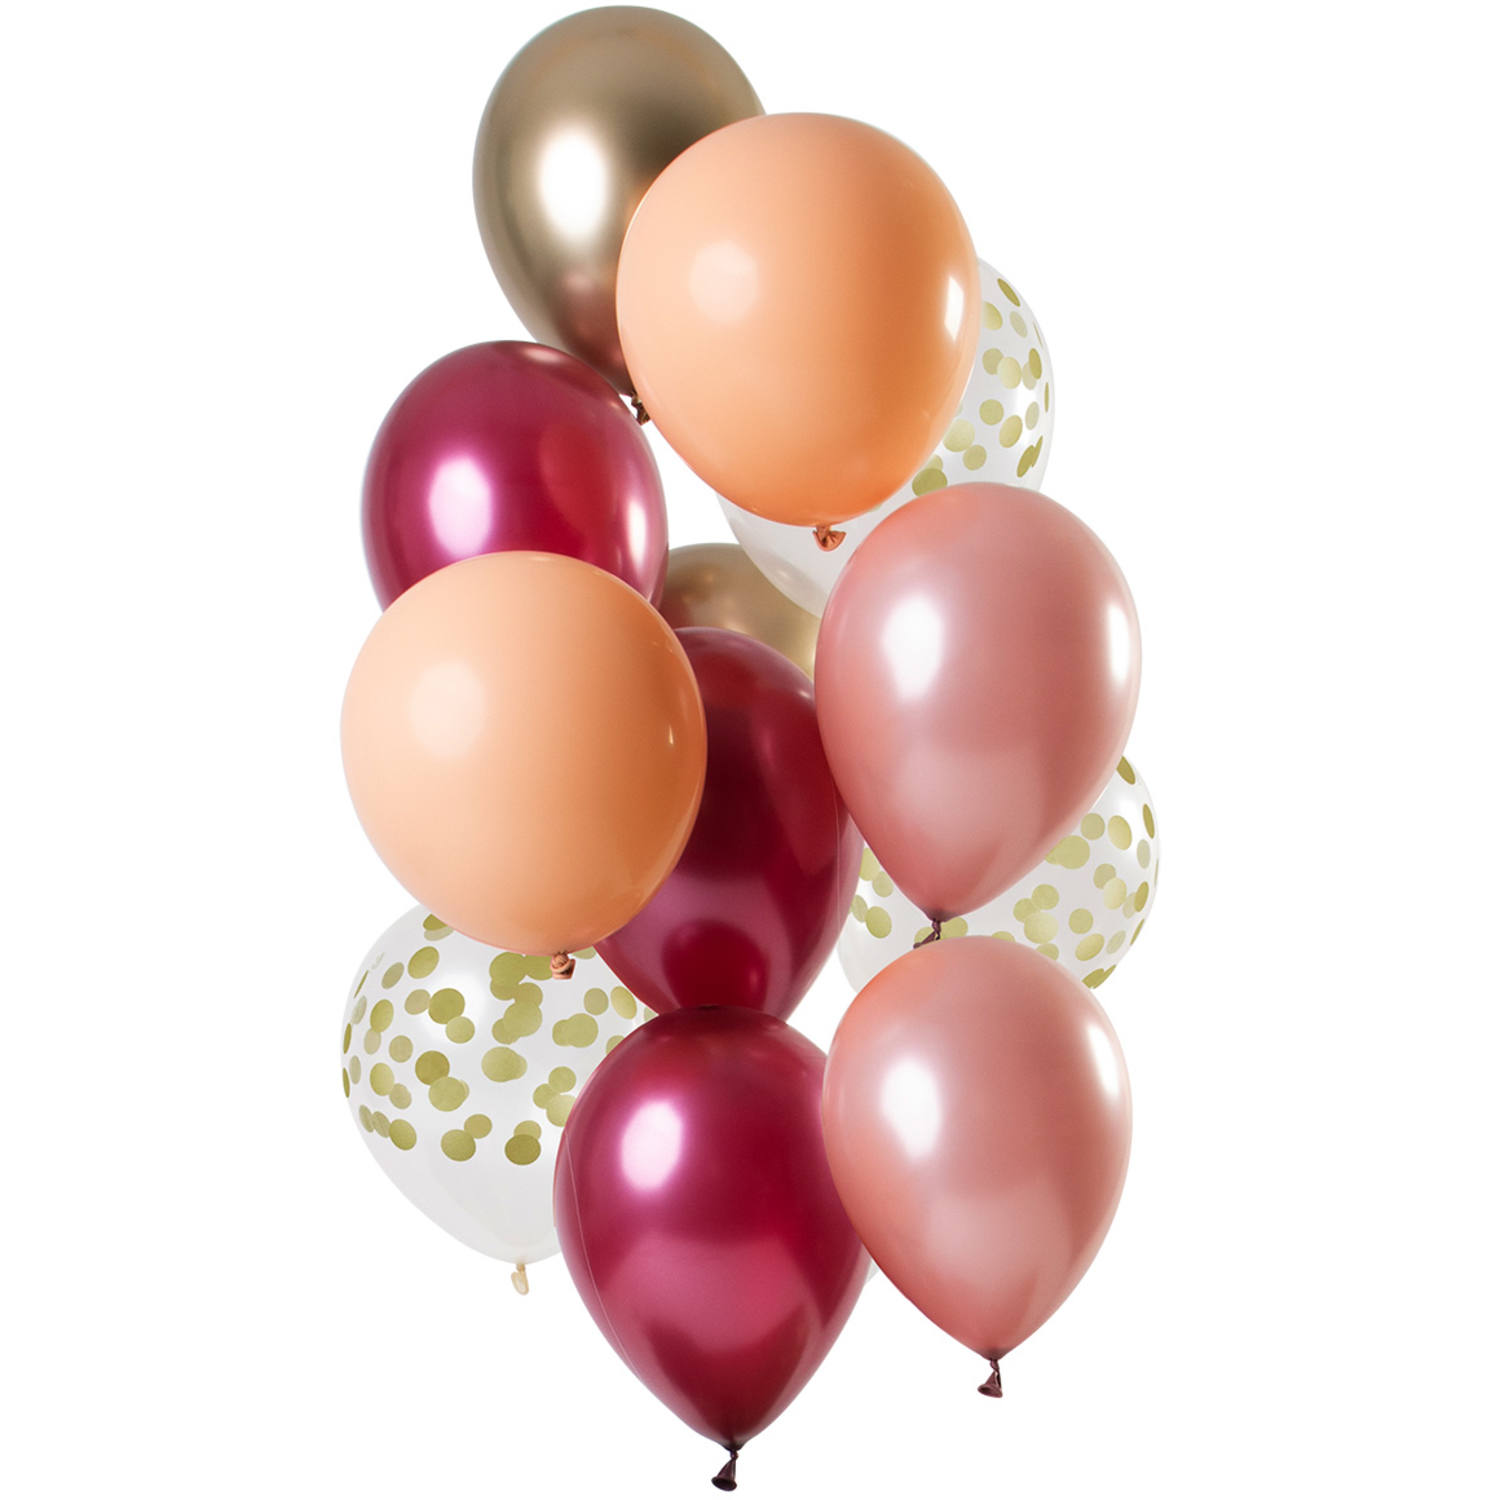 NEU Premium-Latex-Luftballons Rich Ruby, 33cm, 12 Stk.